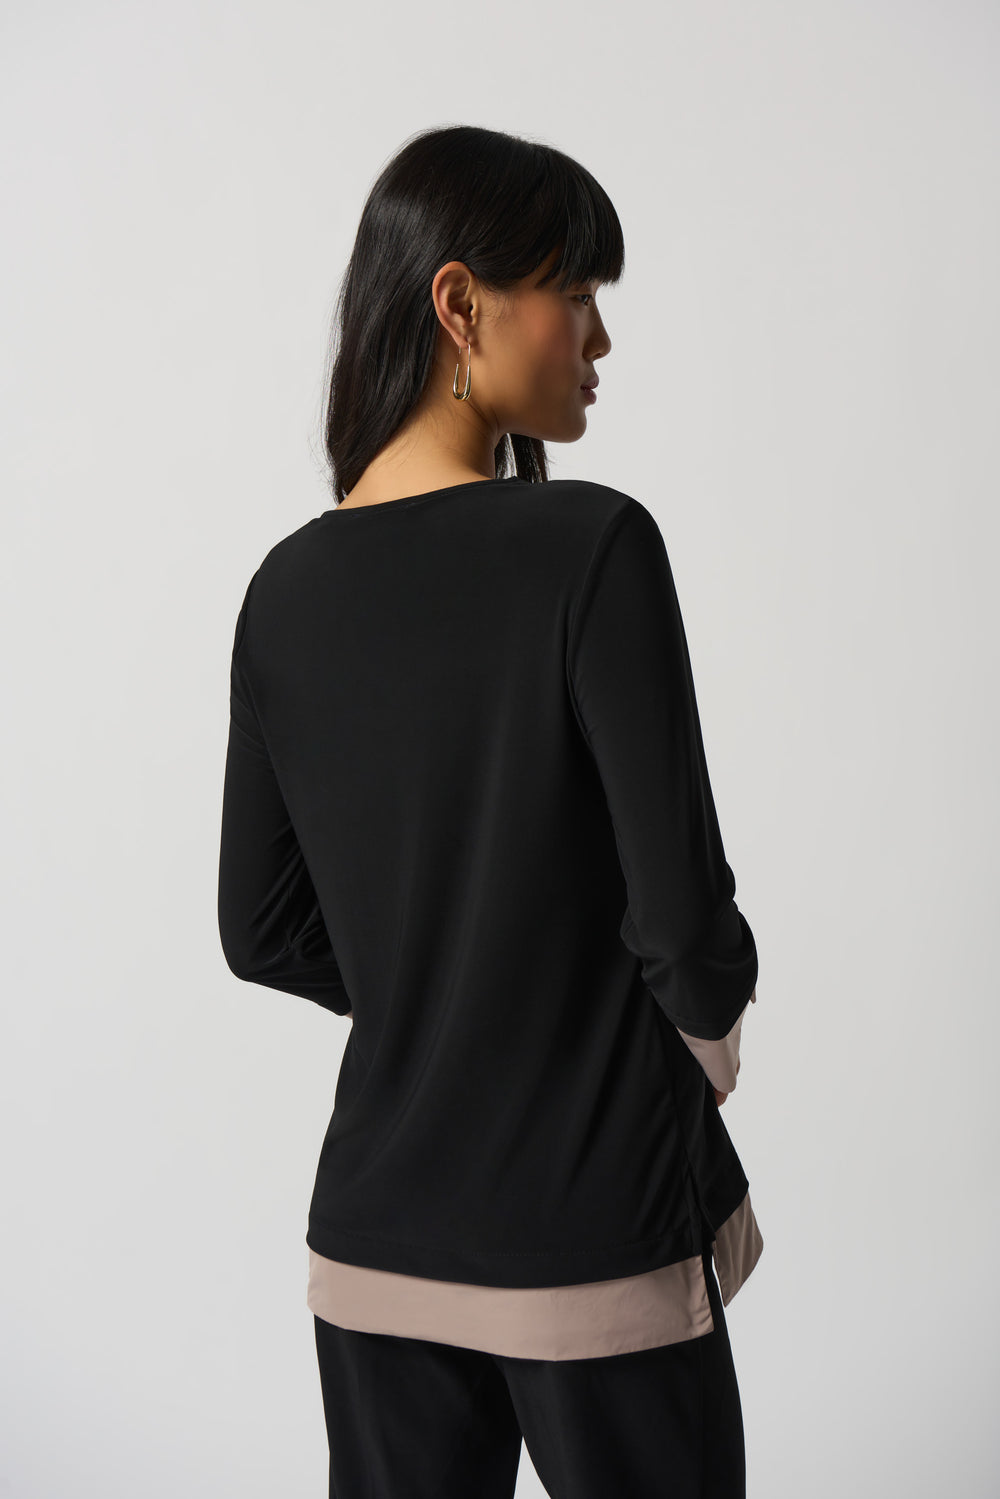 Joseph Ribkoff Fall 2023 women's business casual tunic top - back